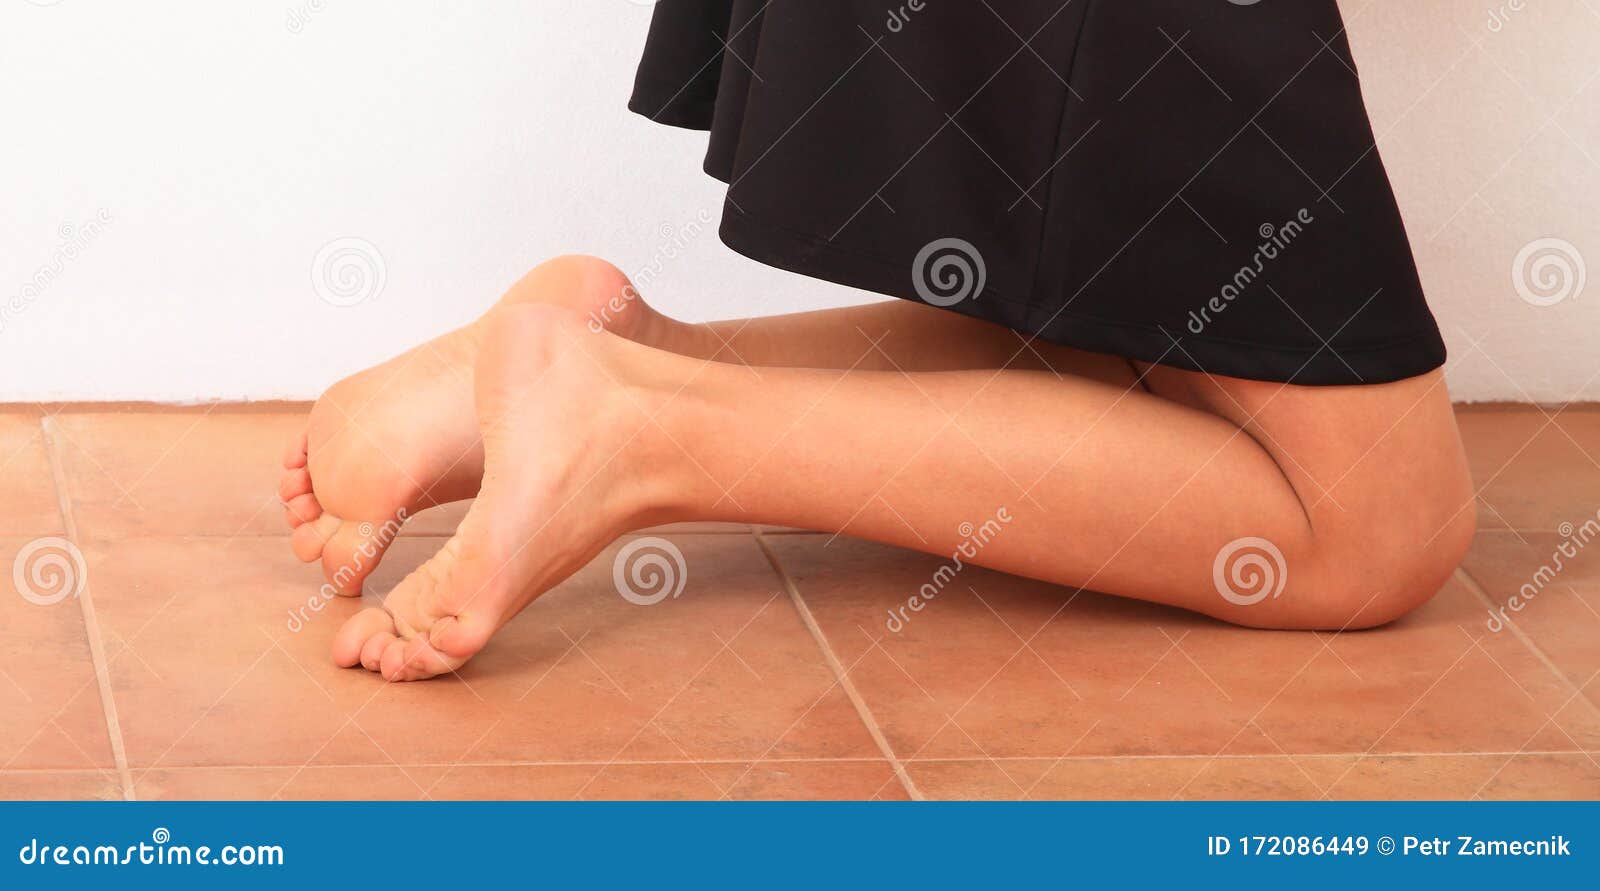 candace billings recommends Black Women Bare Feet